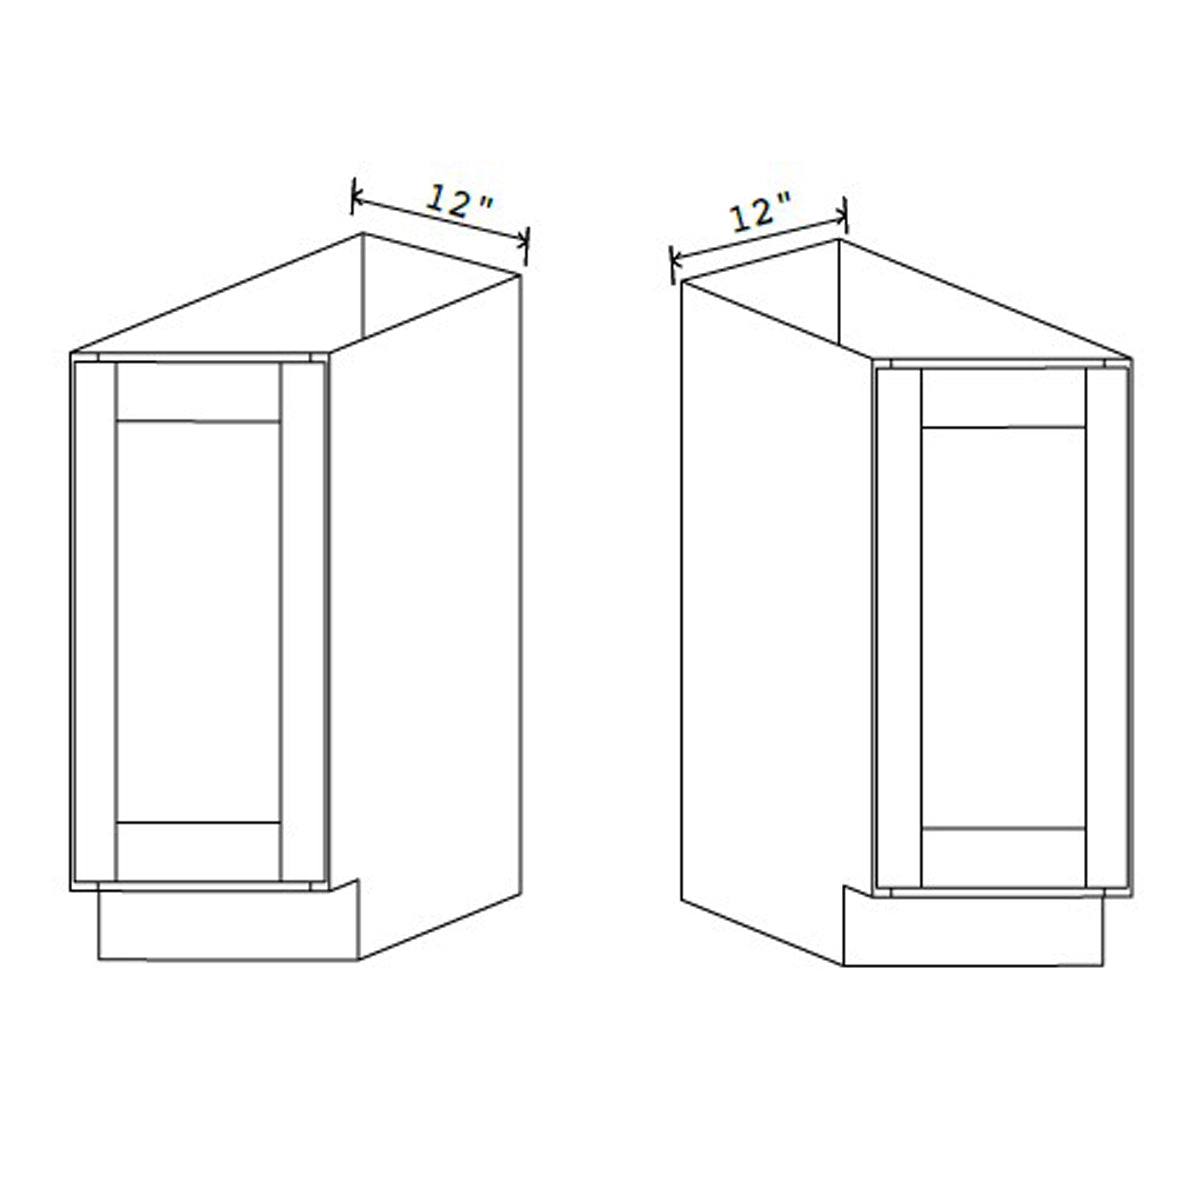 Angle Base Cabinet - 12W x 34-1/2H x 24D - 2D LEFT - Blue Shaker Cabinet